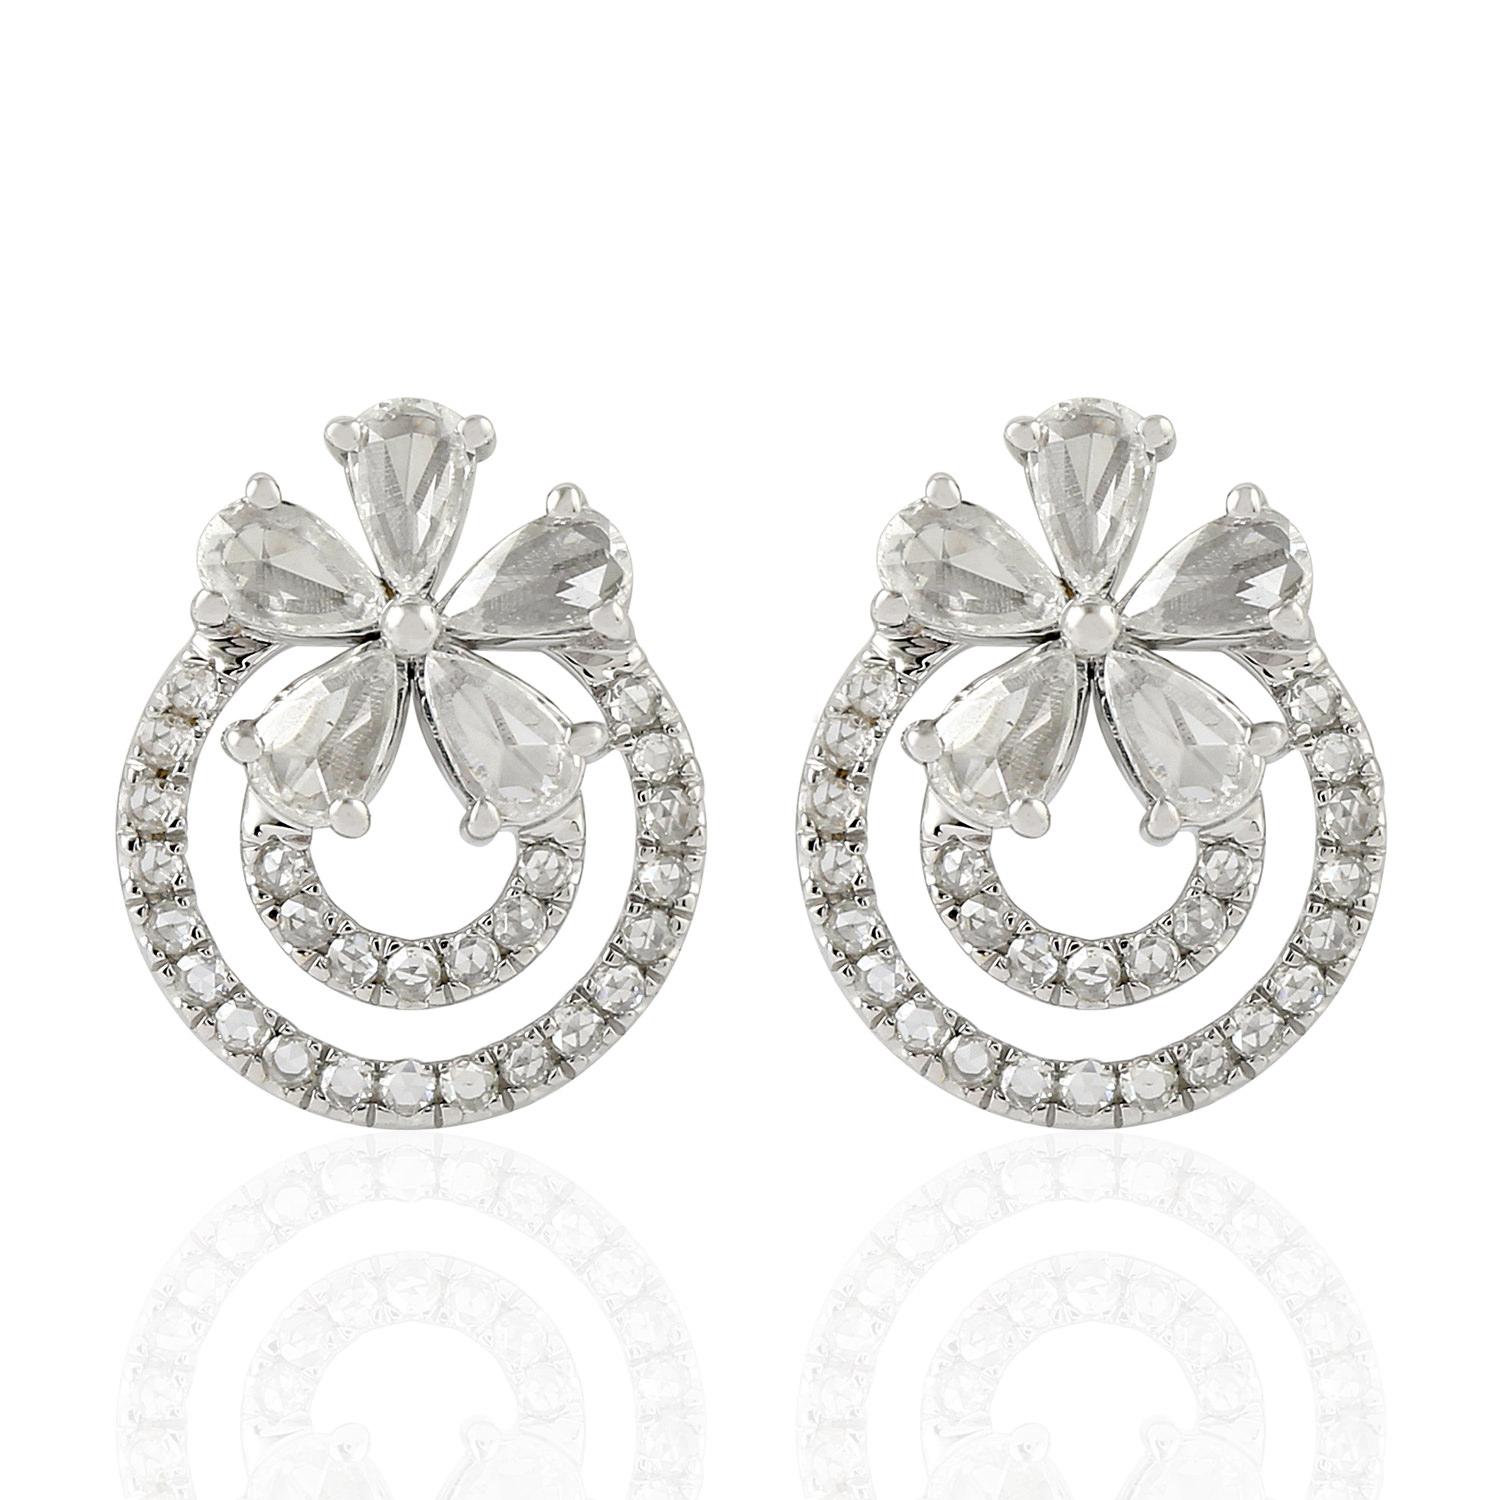 Mixed Cut Swirl & Flower Rose Cut Diamonds Stud Earrings Made In 18k White Gold